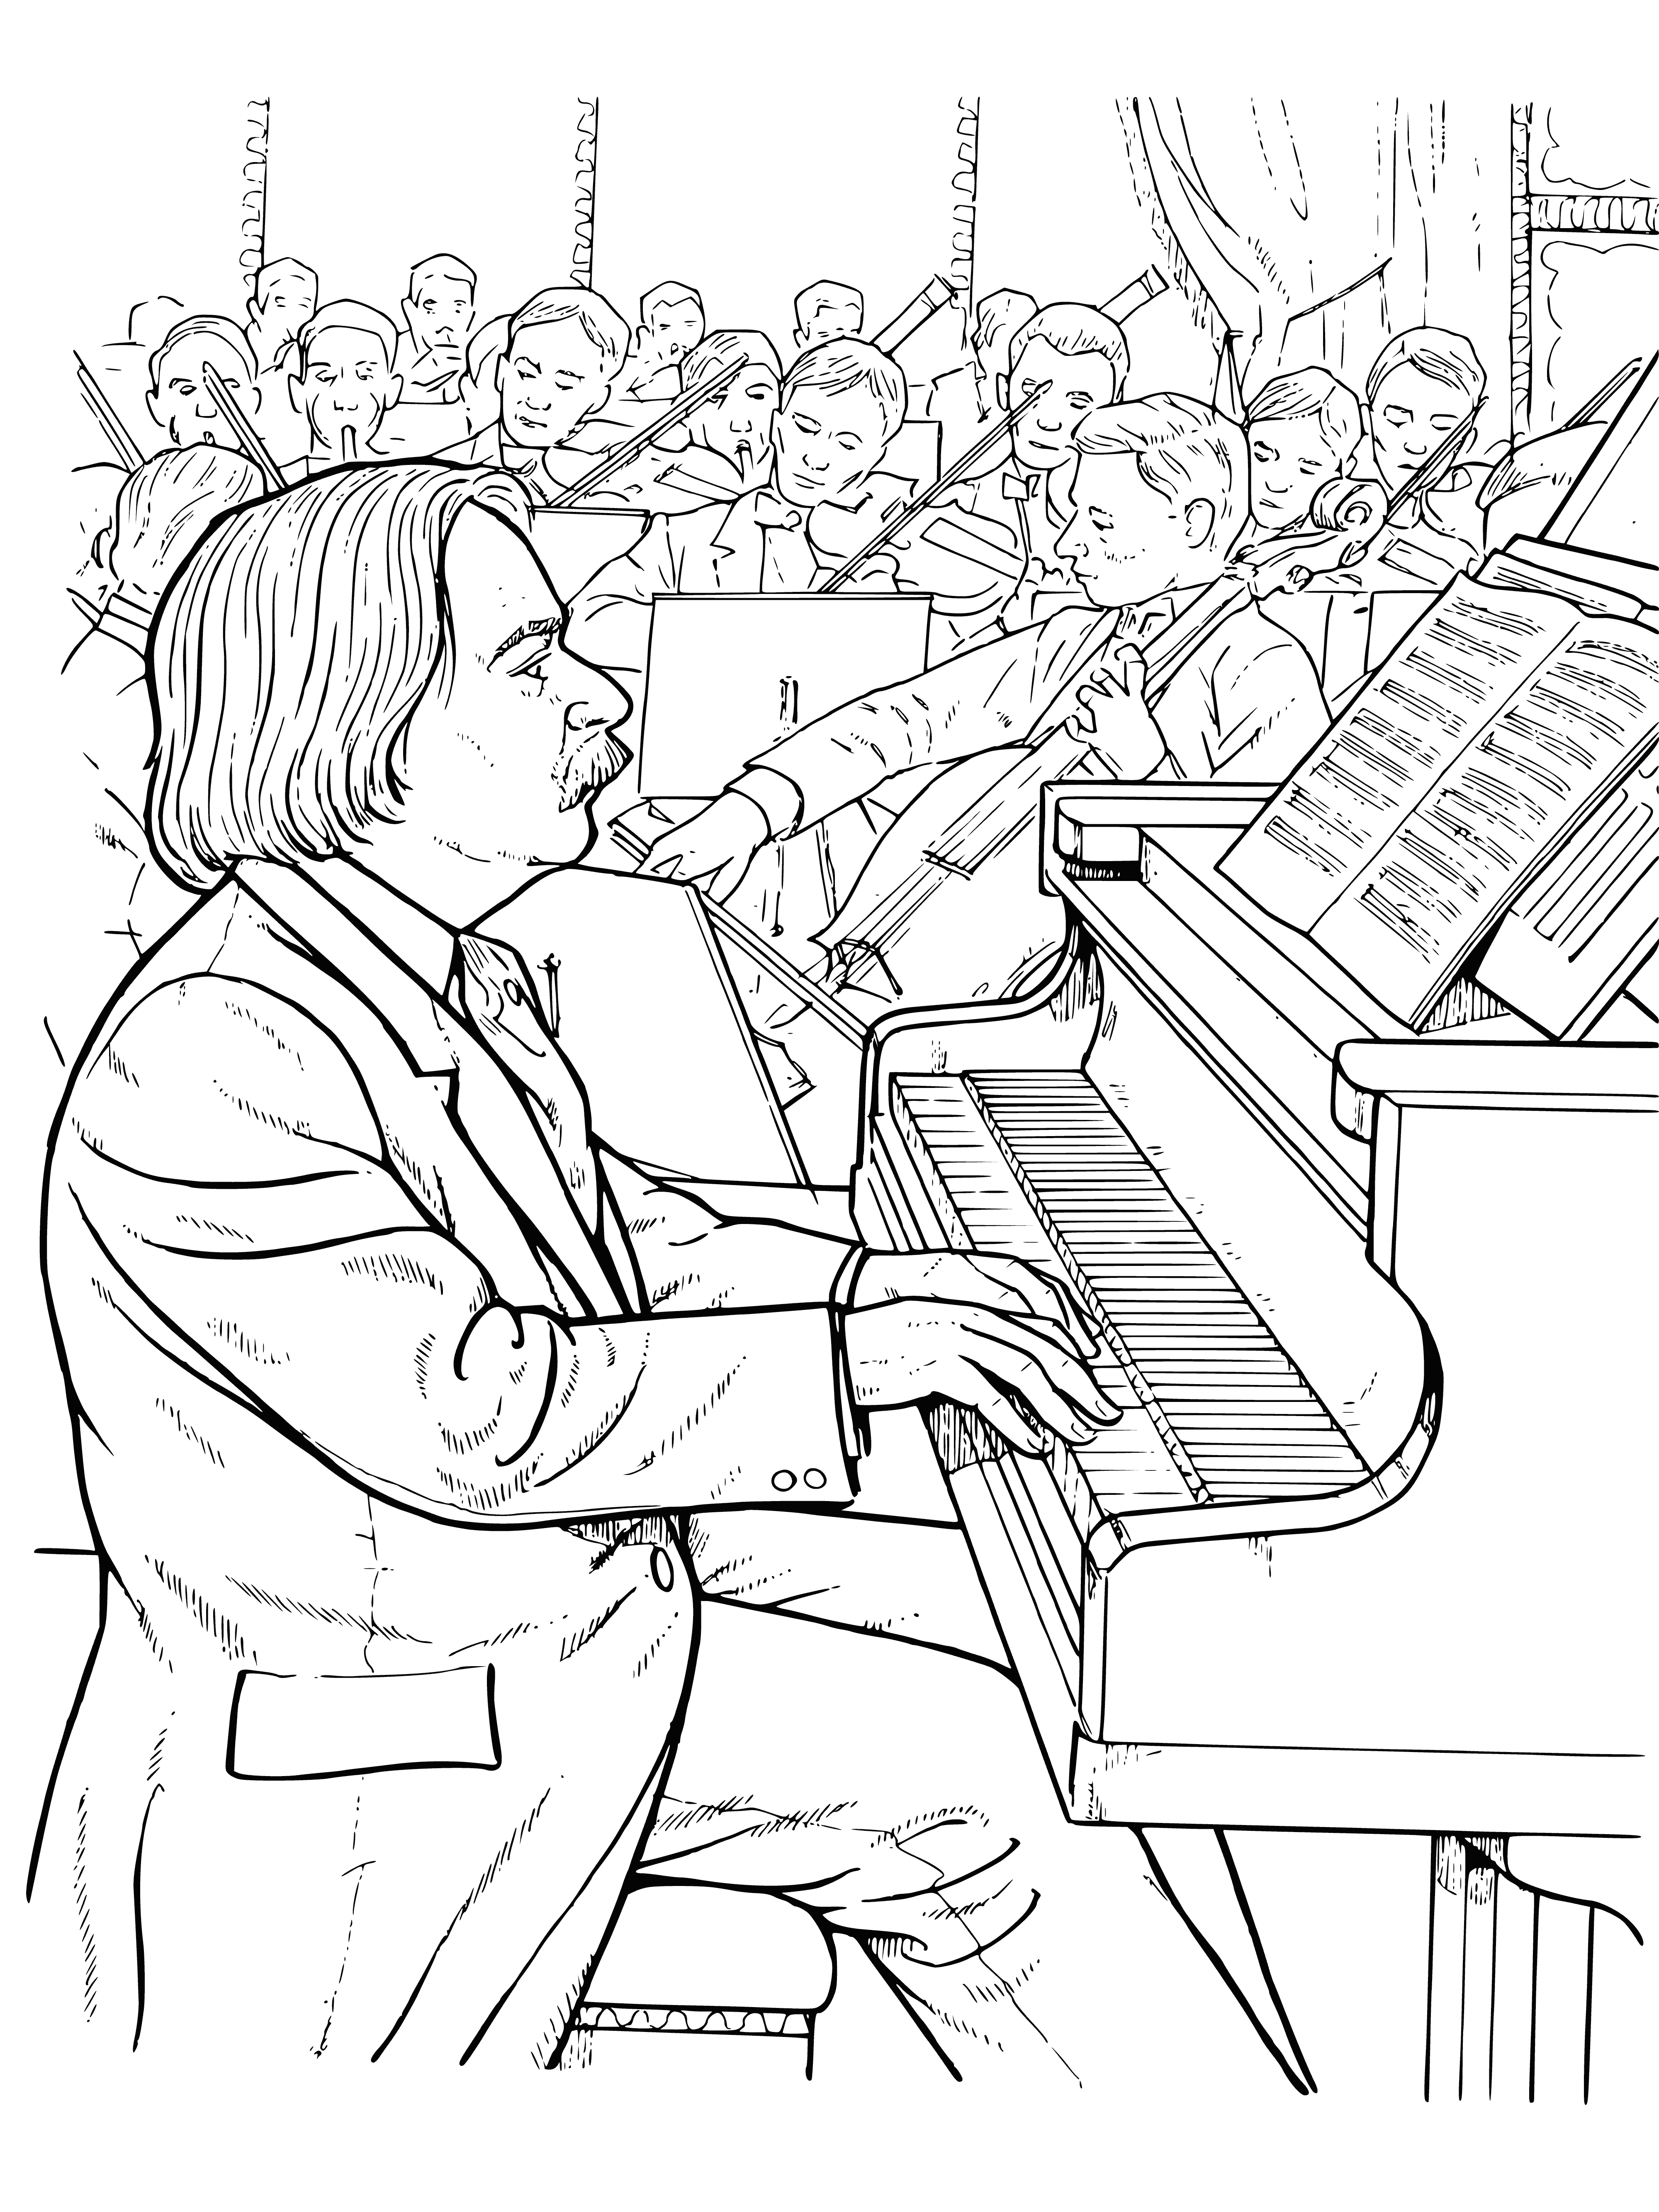 Pianist Malseite